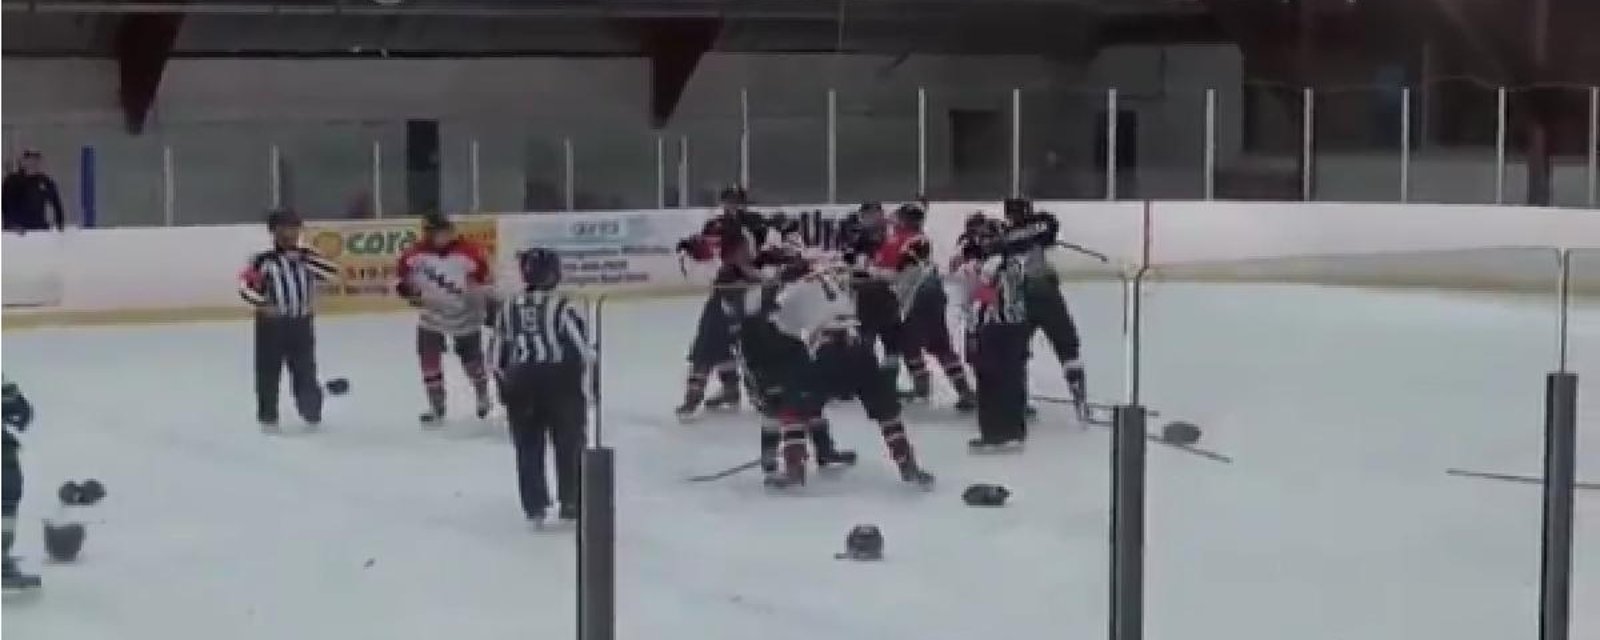 Moment d'une grande violence lors d'un match de hockey!